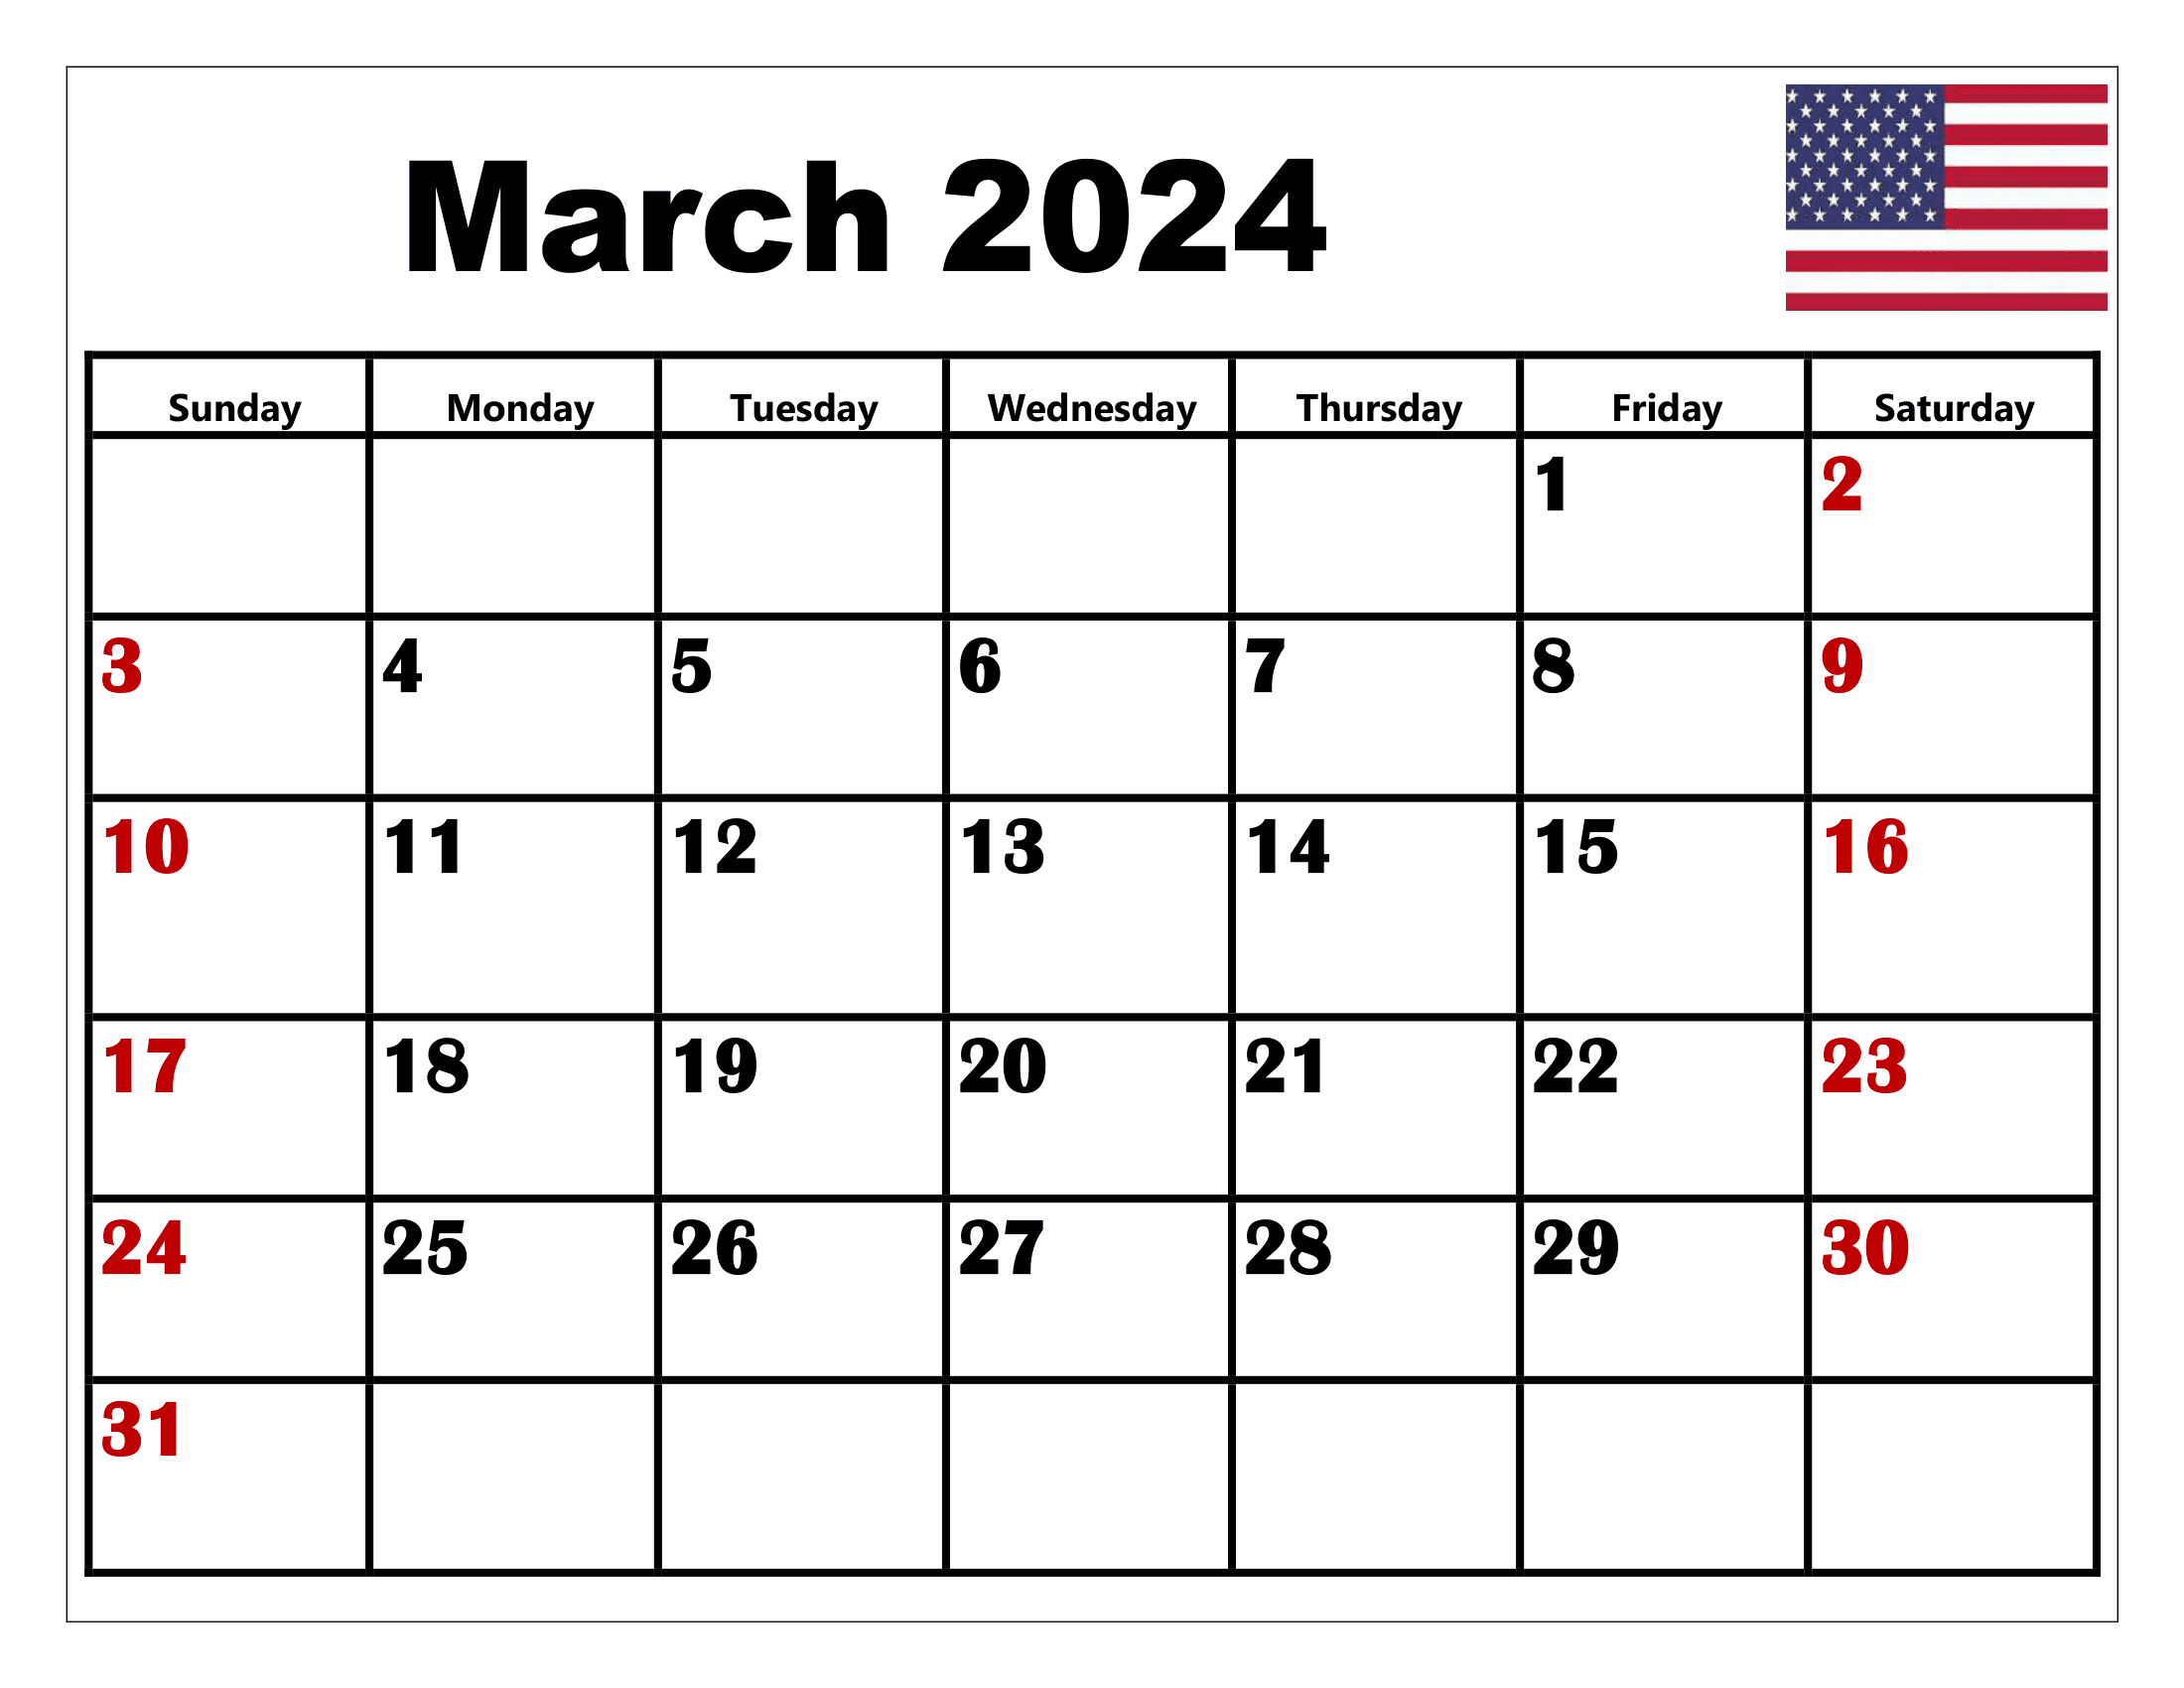 March 2024 Calendar Printable Pdf With Holidays Template Free for Free Printable Calendar March 2024 With Holidays